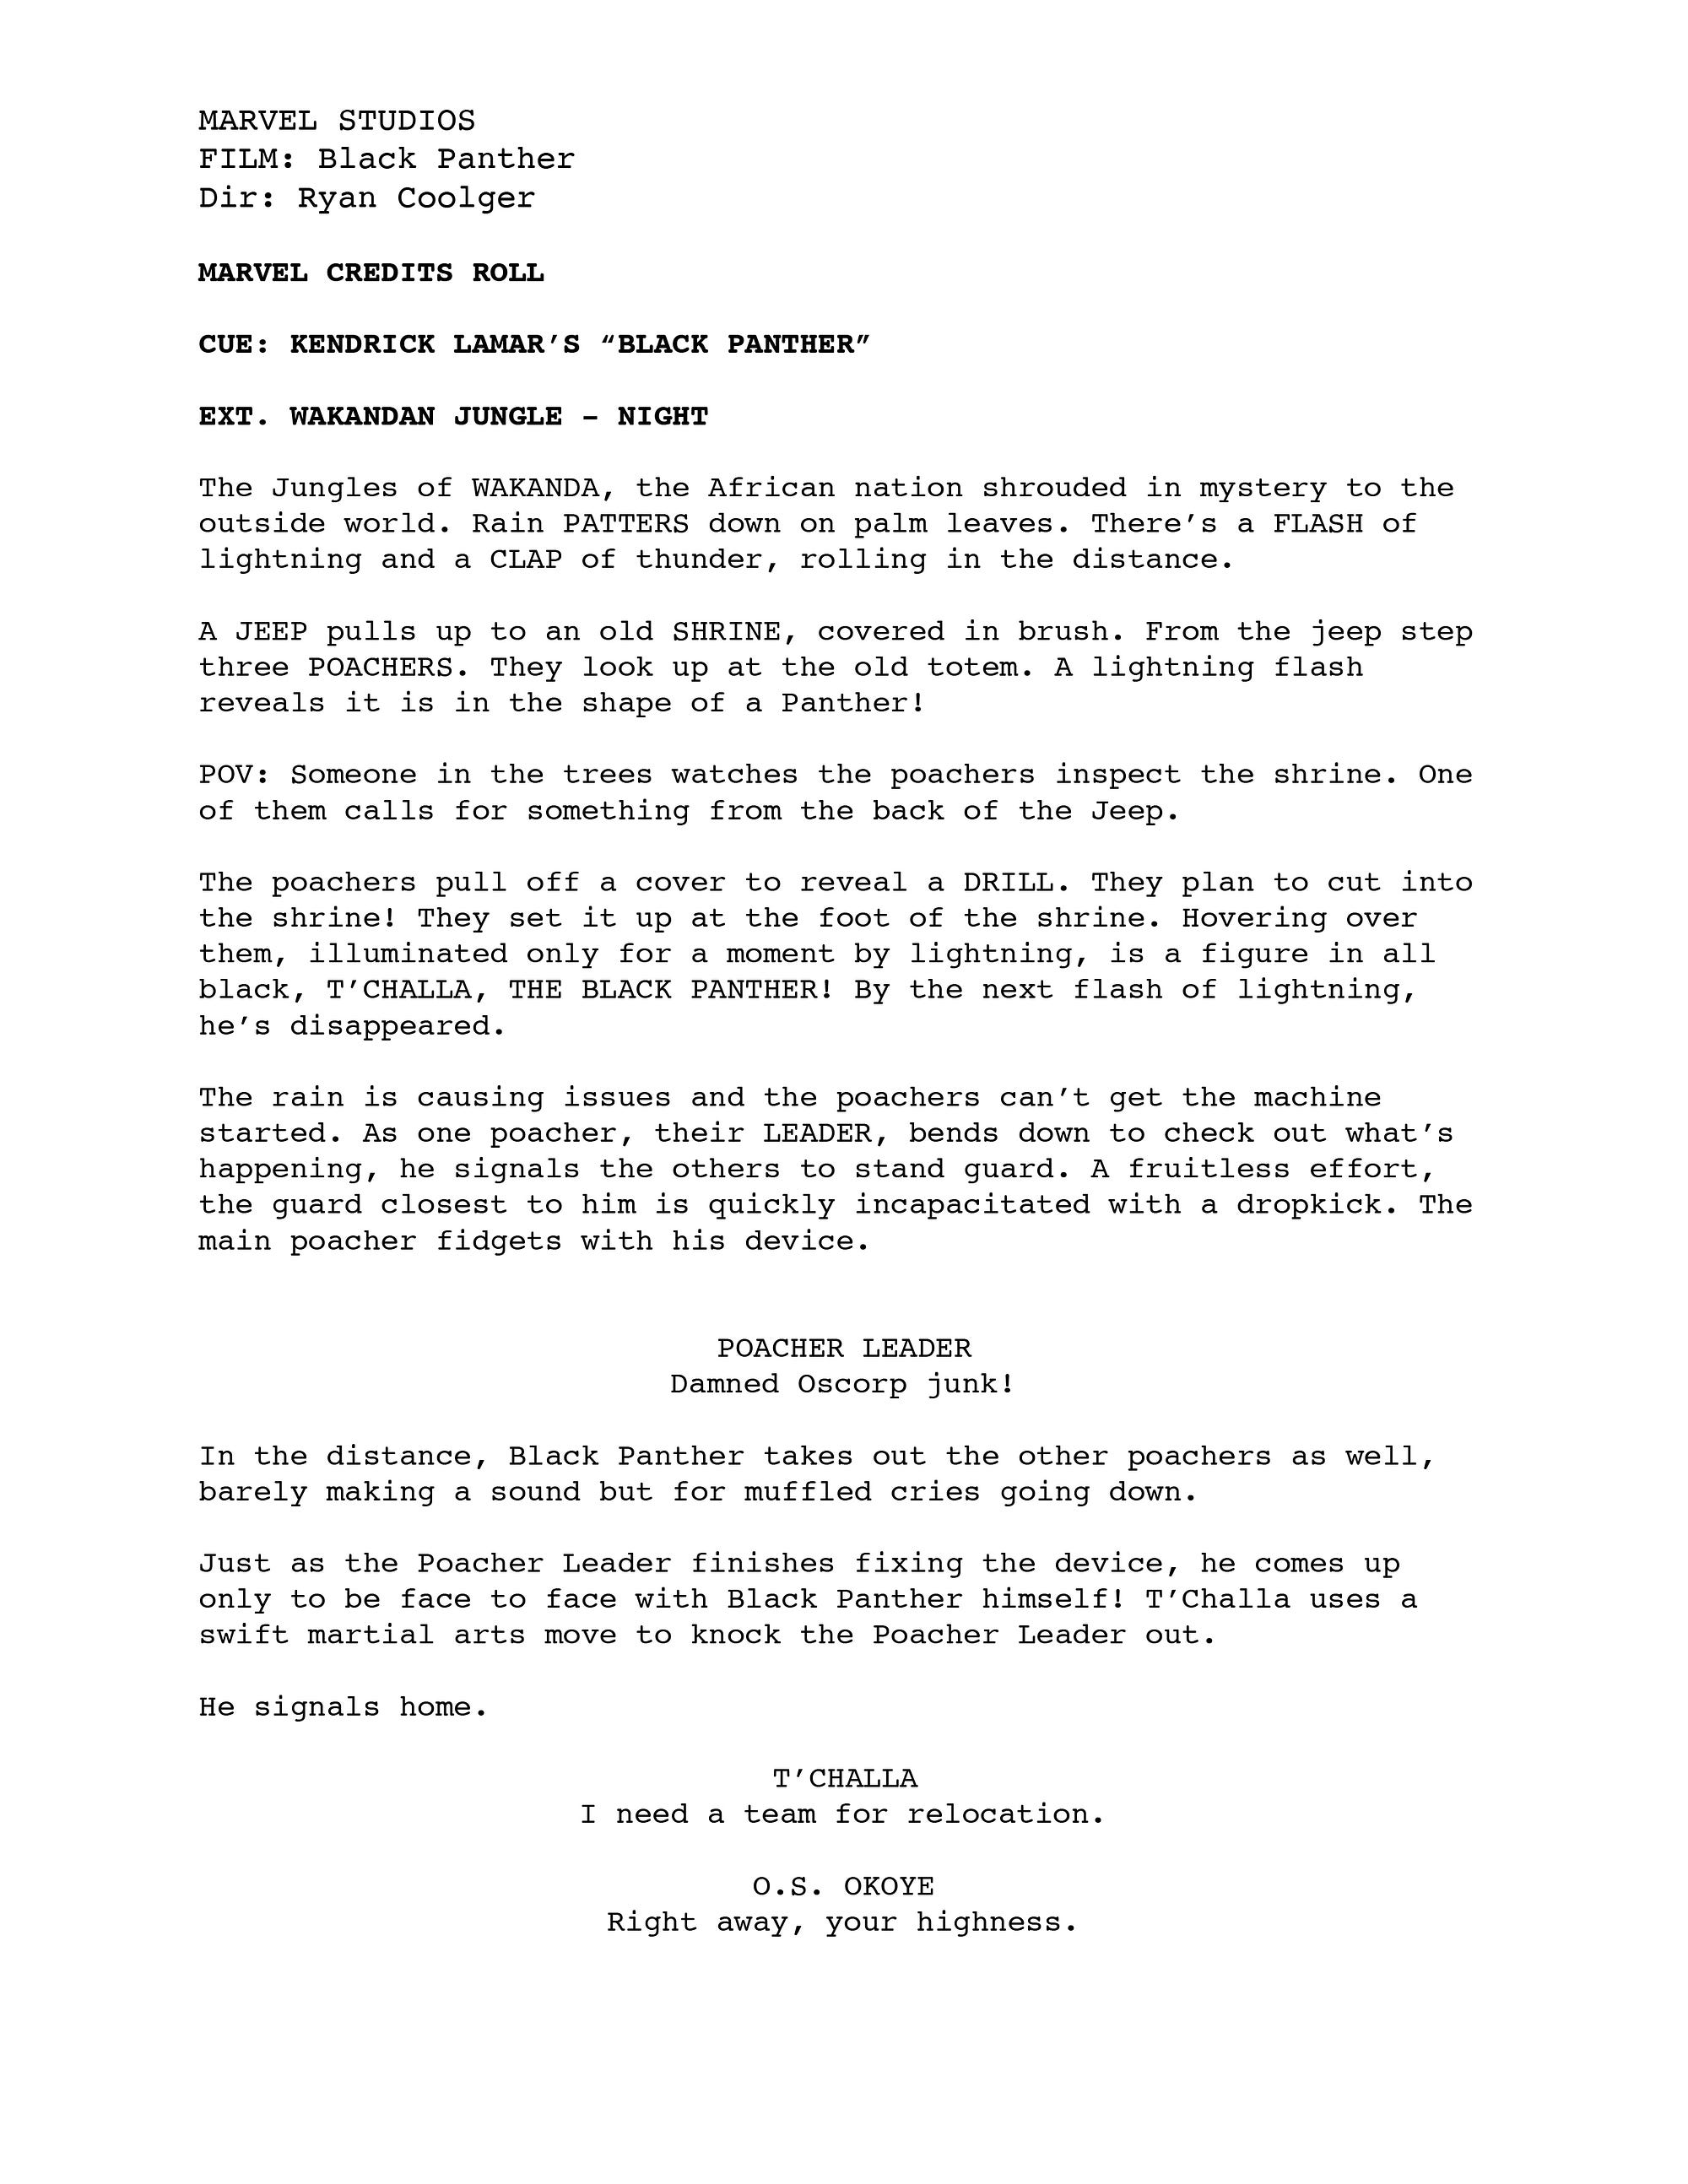 Black panther movie script pdf